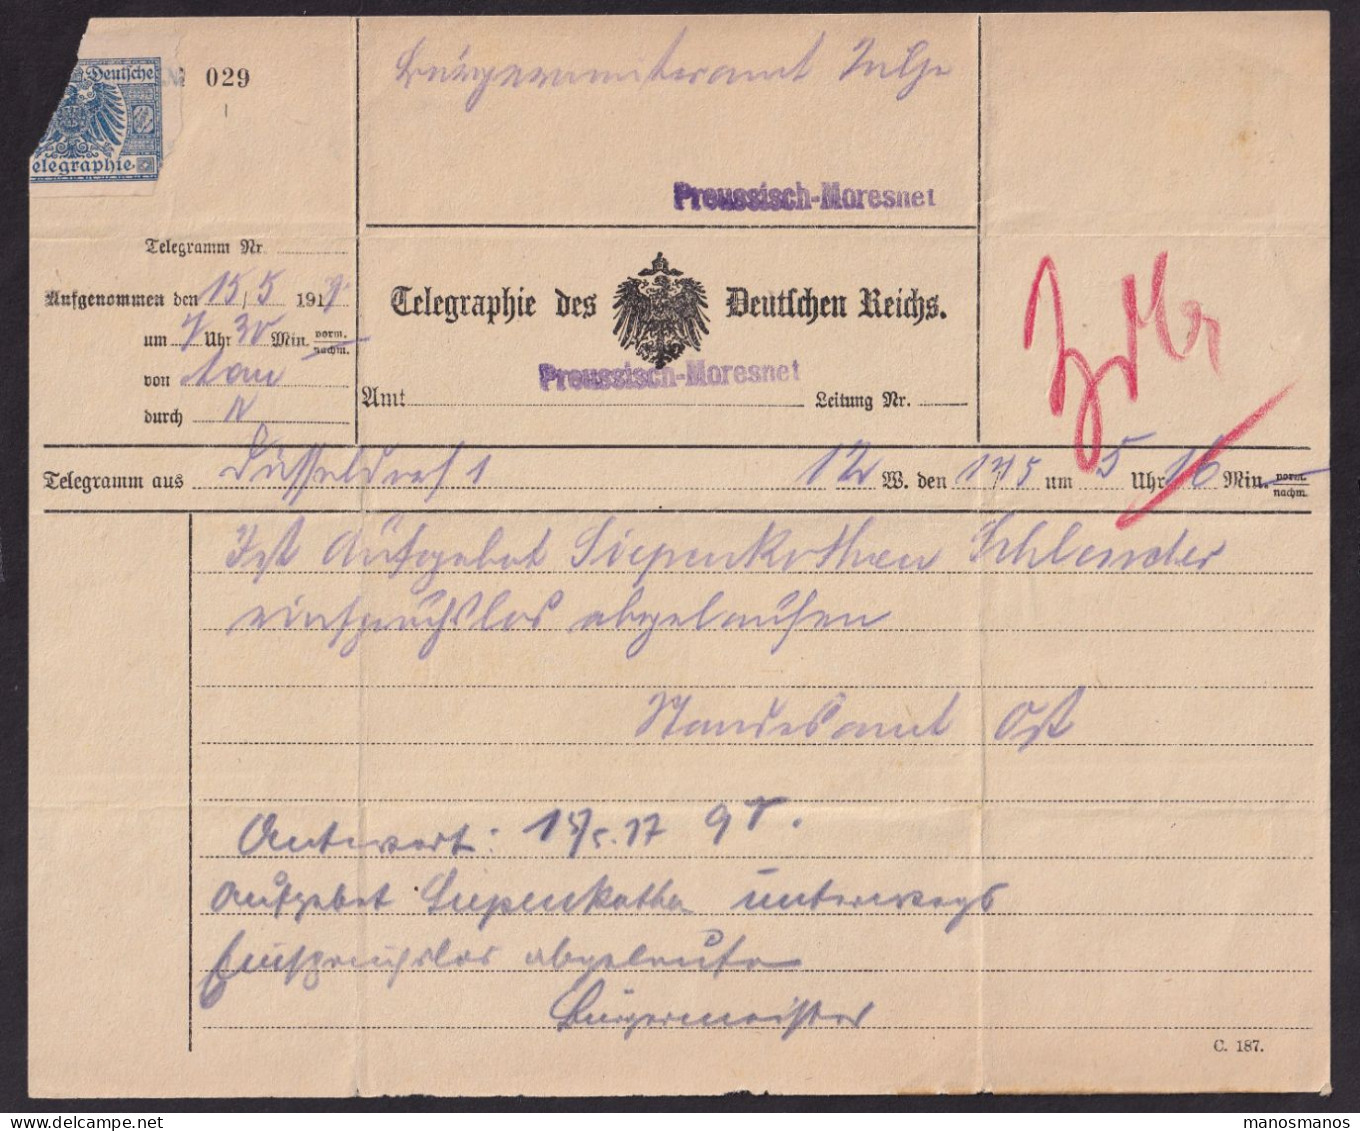 186/39 - CANTONS DE L'EST - Télégramme Deutsches Reich 1917, Vers PREUSSISCH MORESNET - RARE Griffe Violette - Telegramme